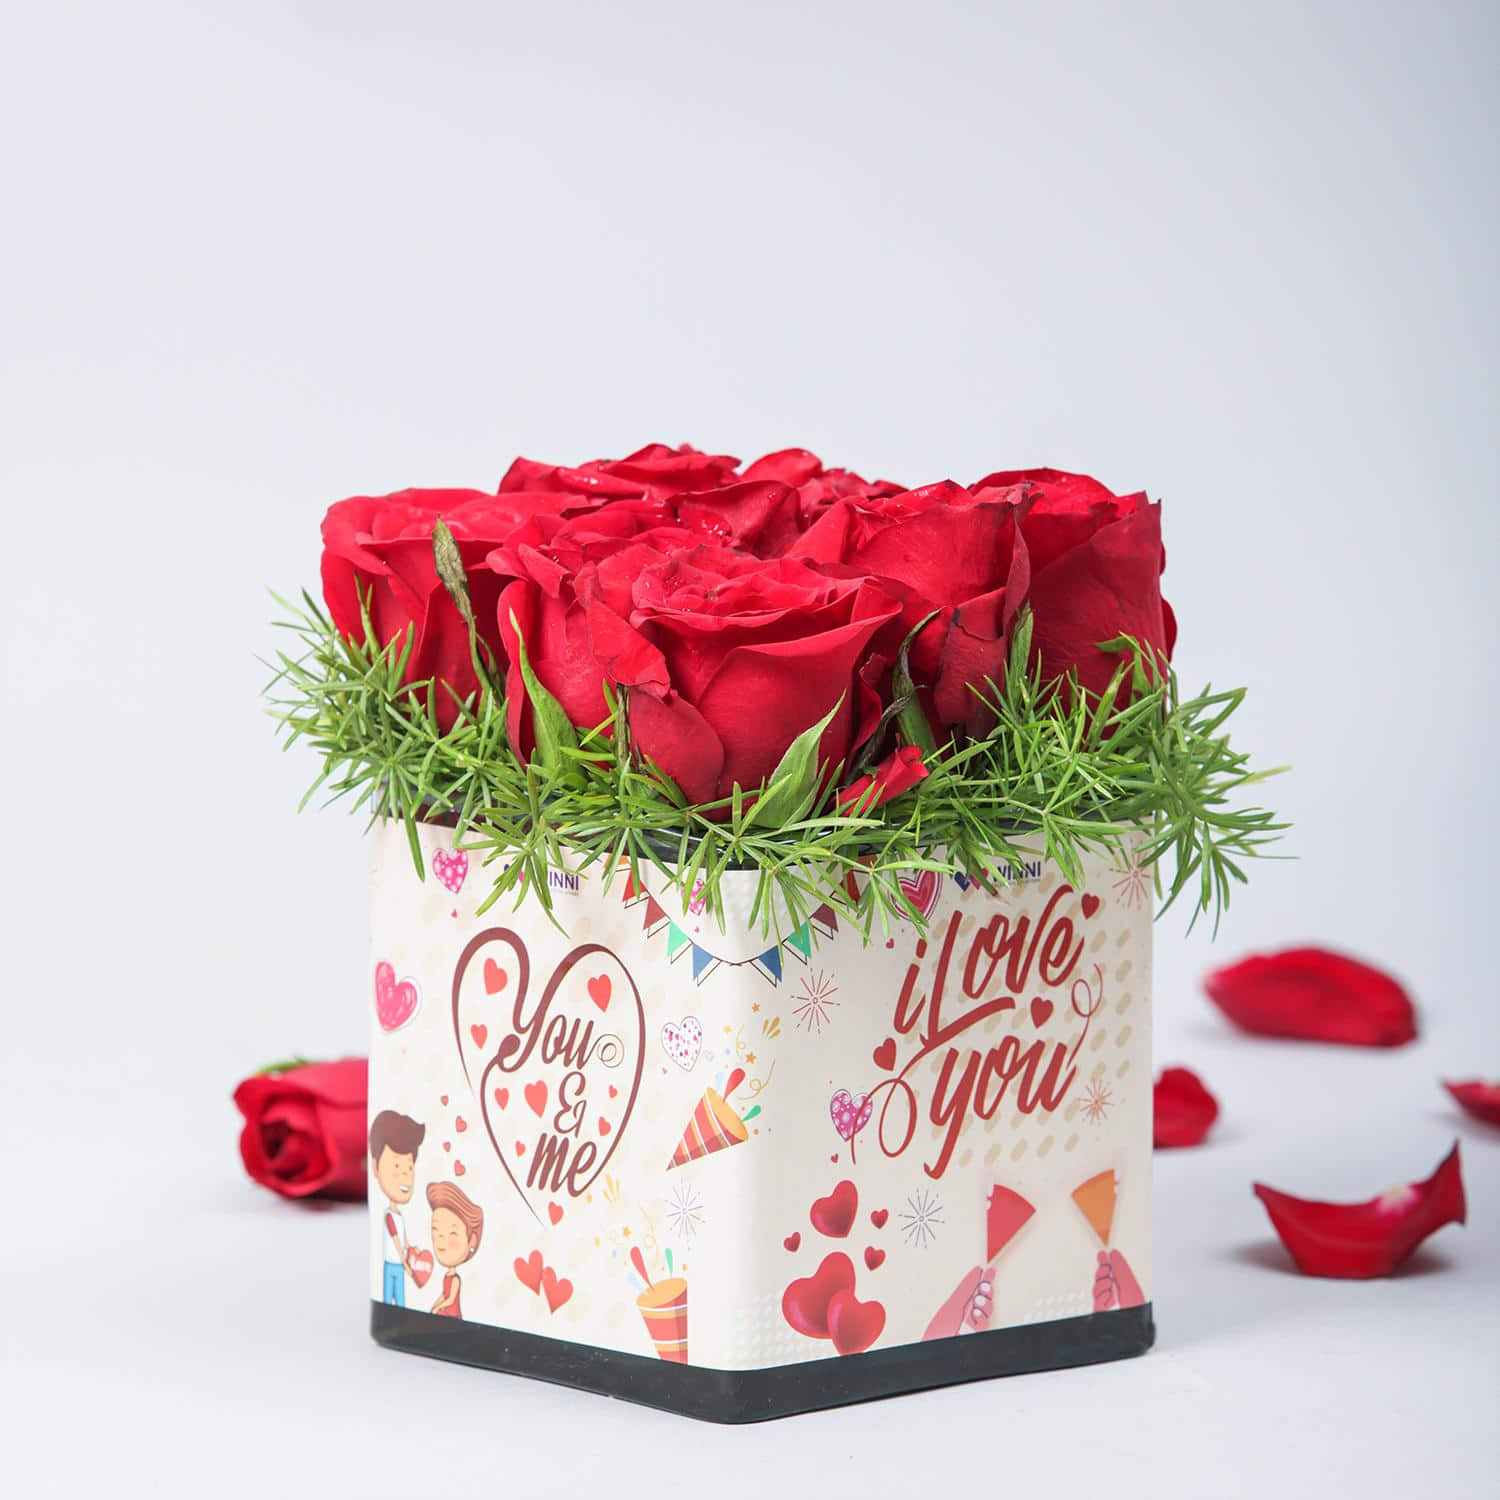 Flower delivery Singapore - ®Angel florist - Award Winning Online florist  Singapore